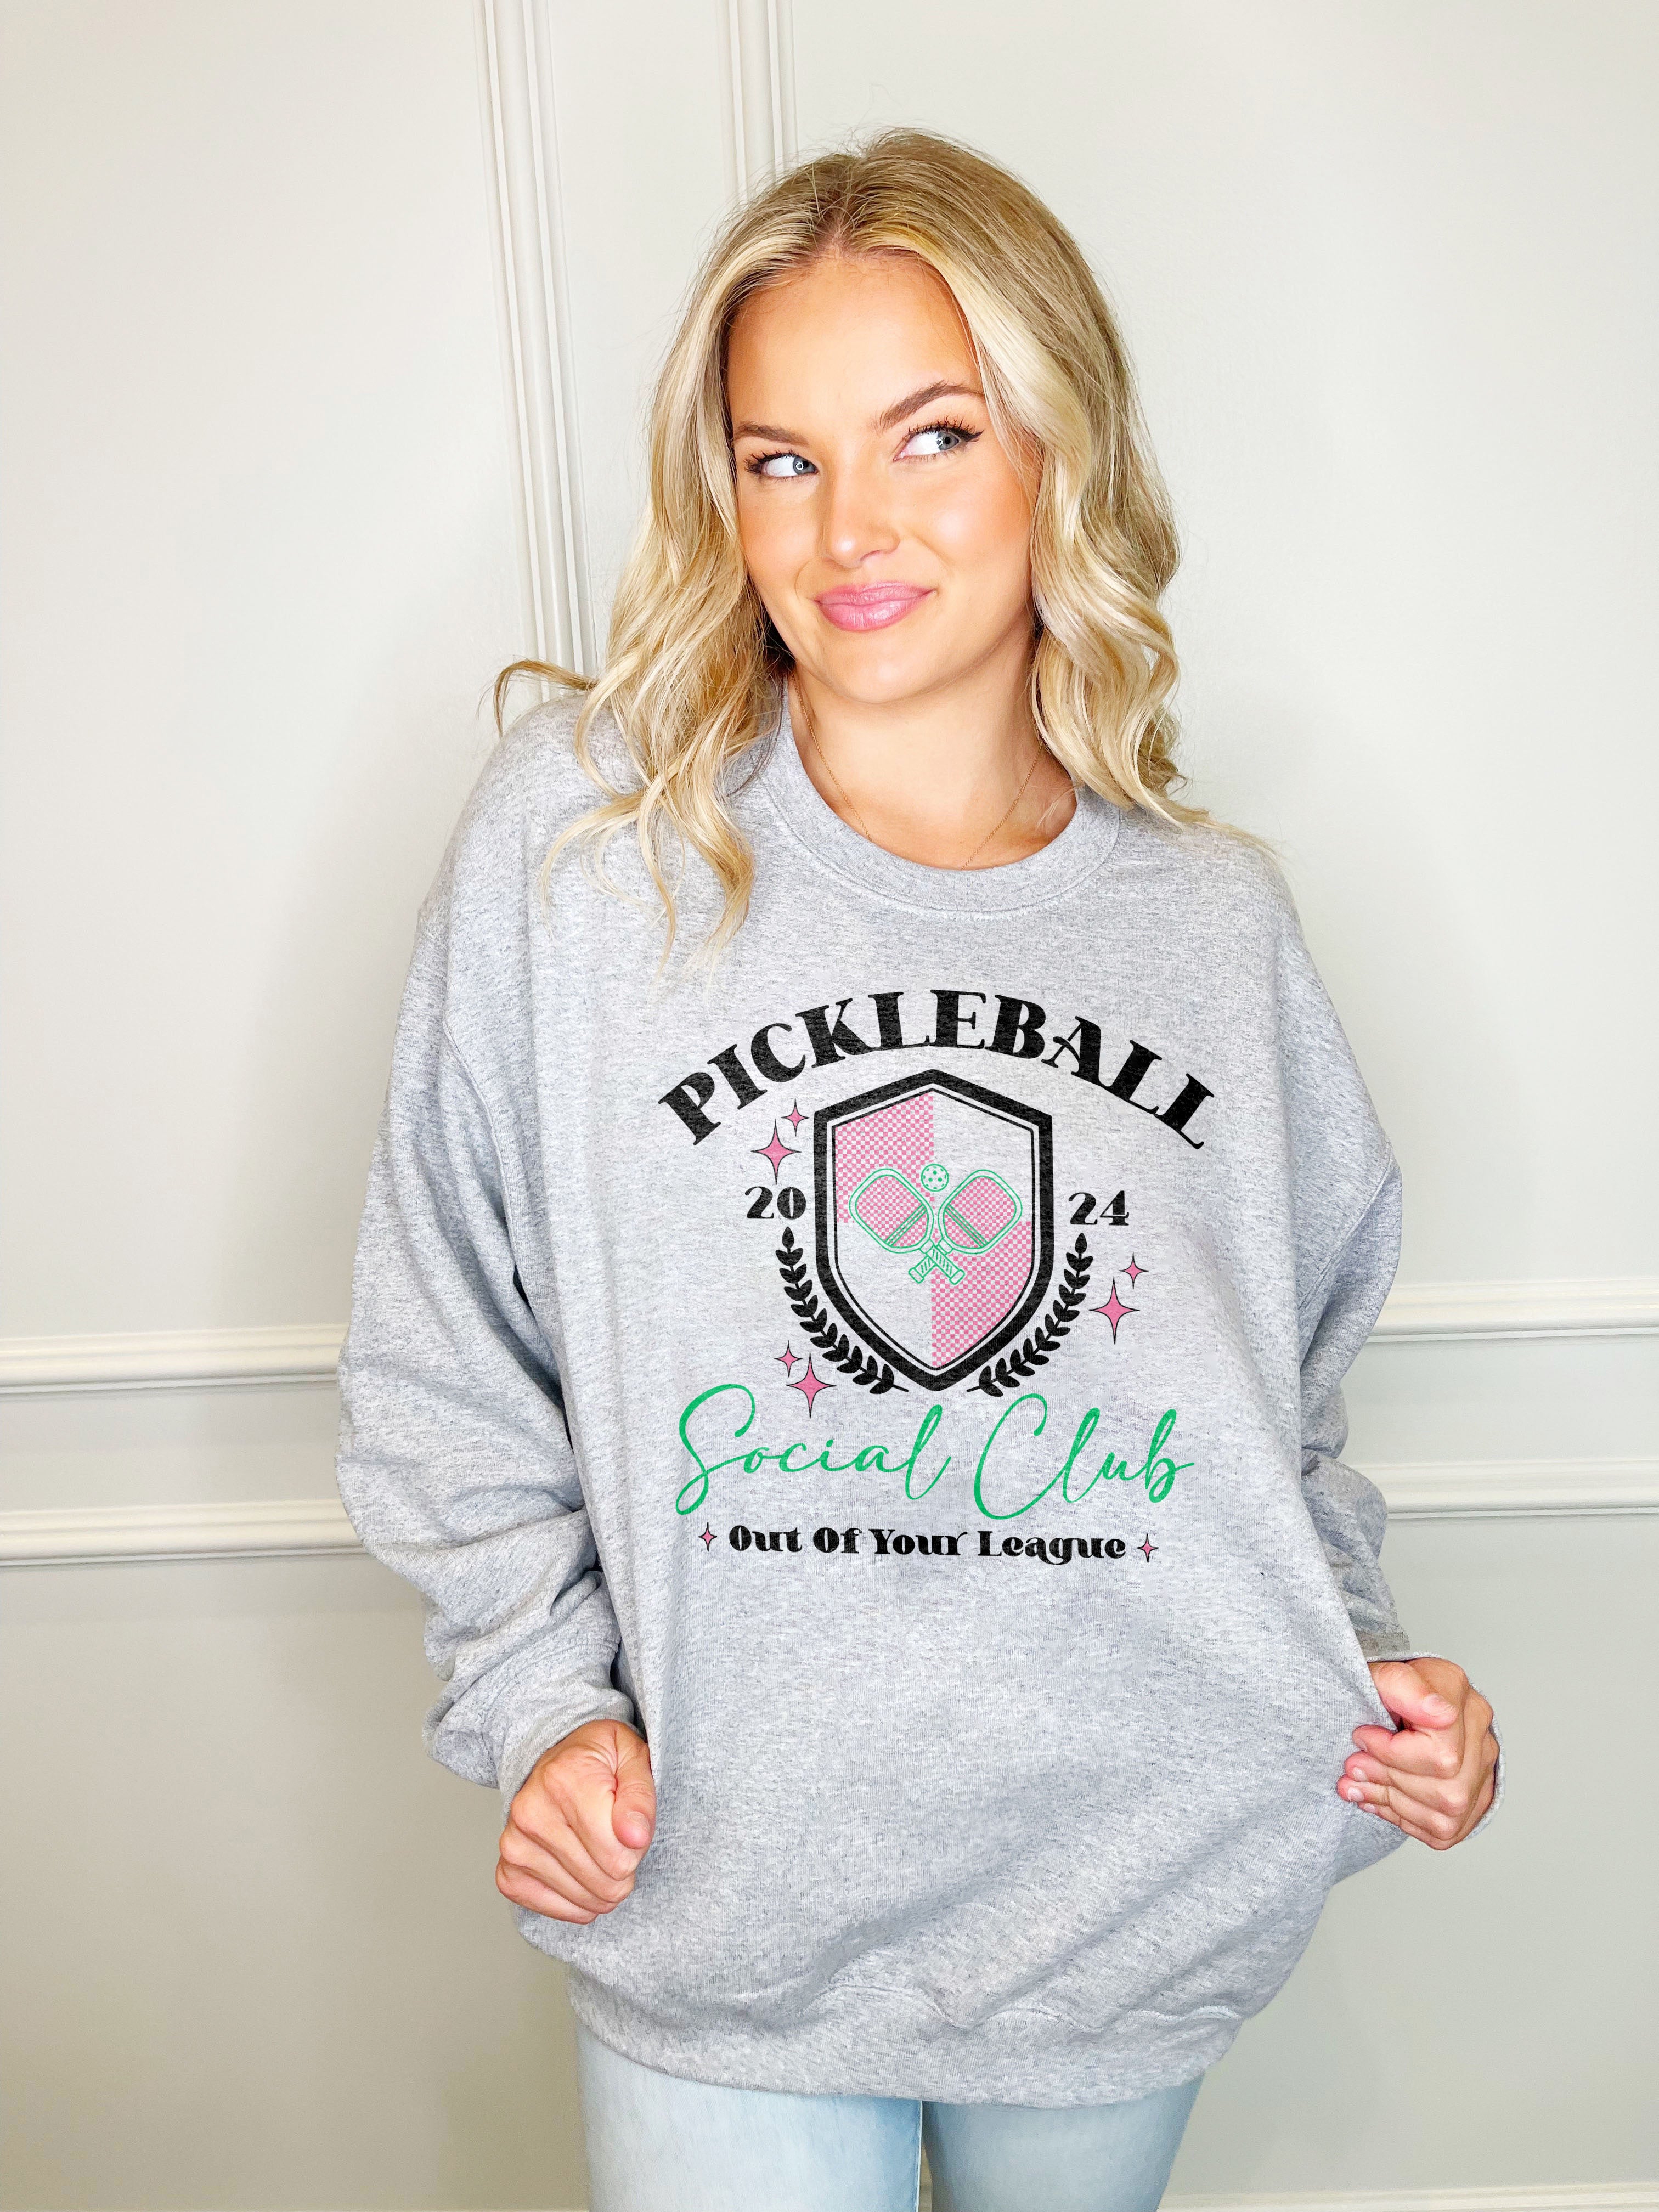 Pickleball Social Club Youth and Adult Sweatshirt